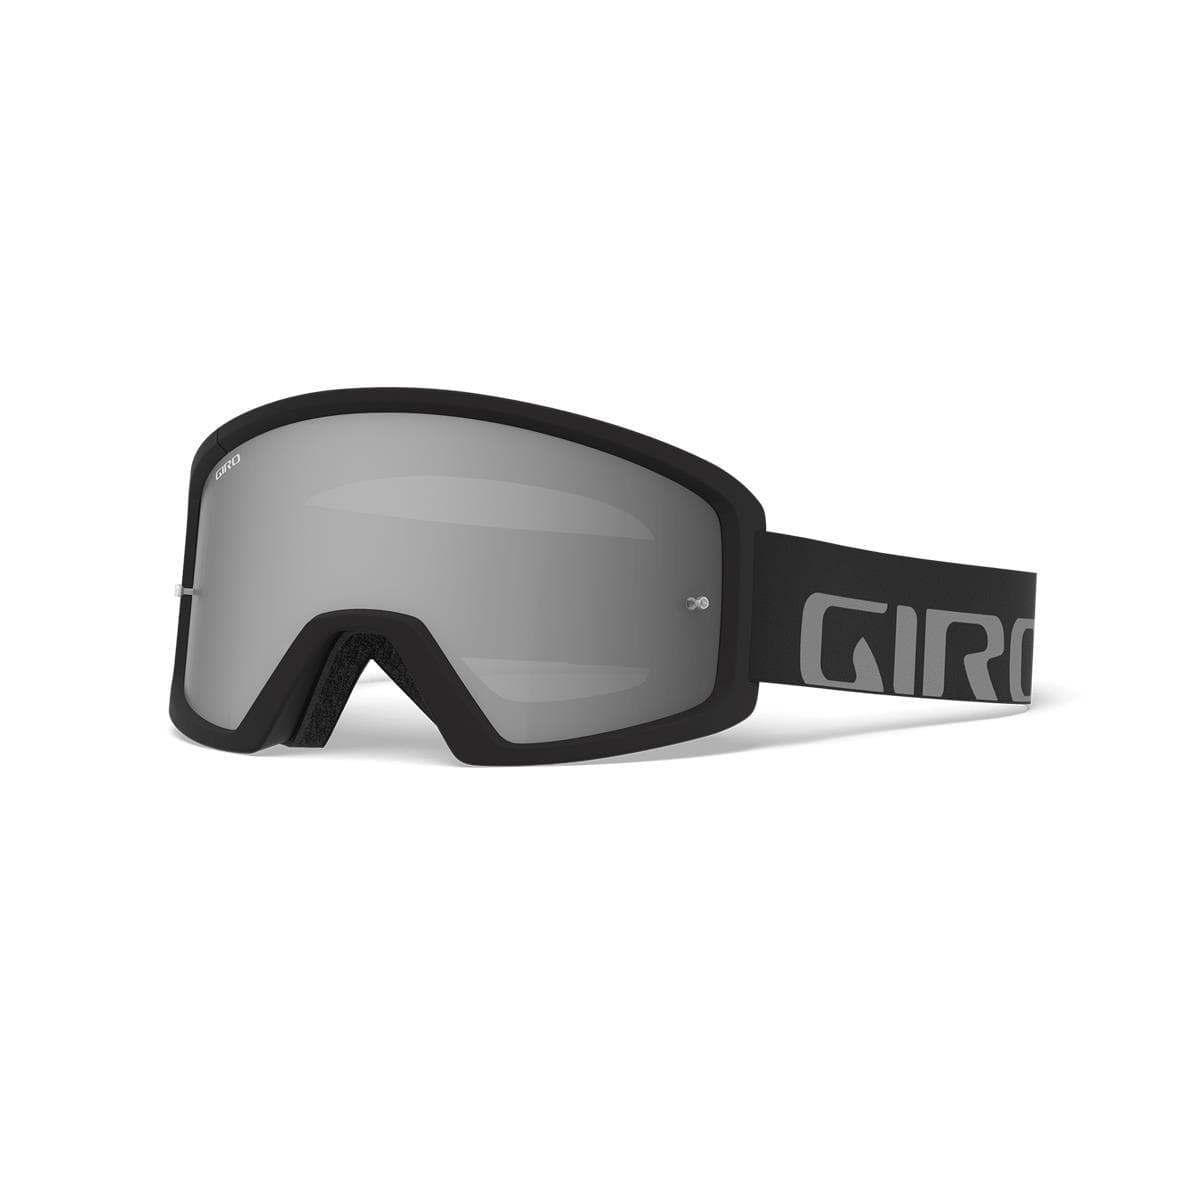 Giro Tazz Mtb Goggles 2019: Black/Grey (Trail Lens) Adult